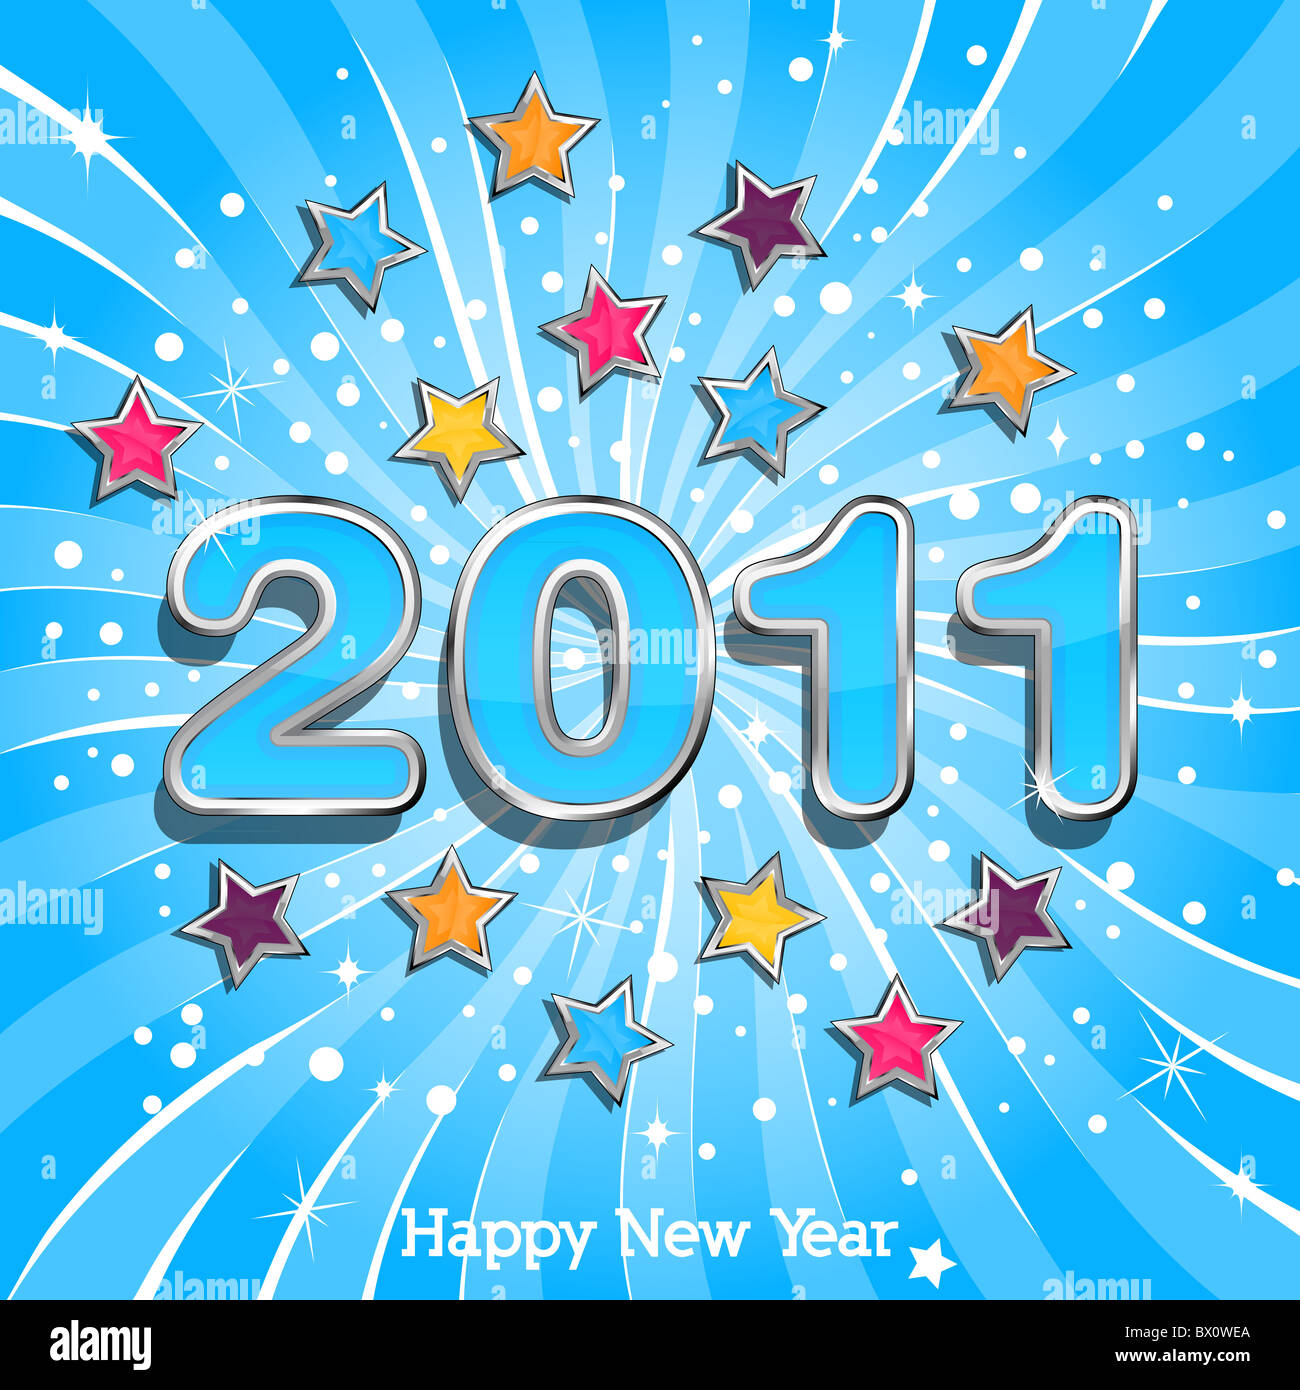 New Year 2011 background Stock Photo